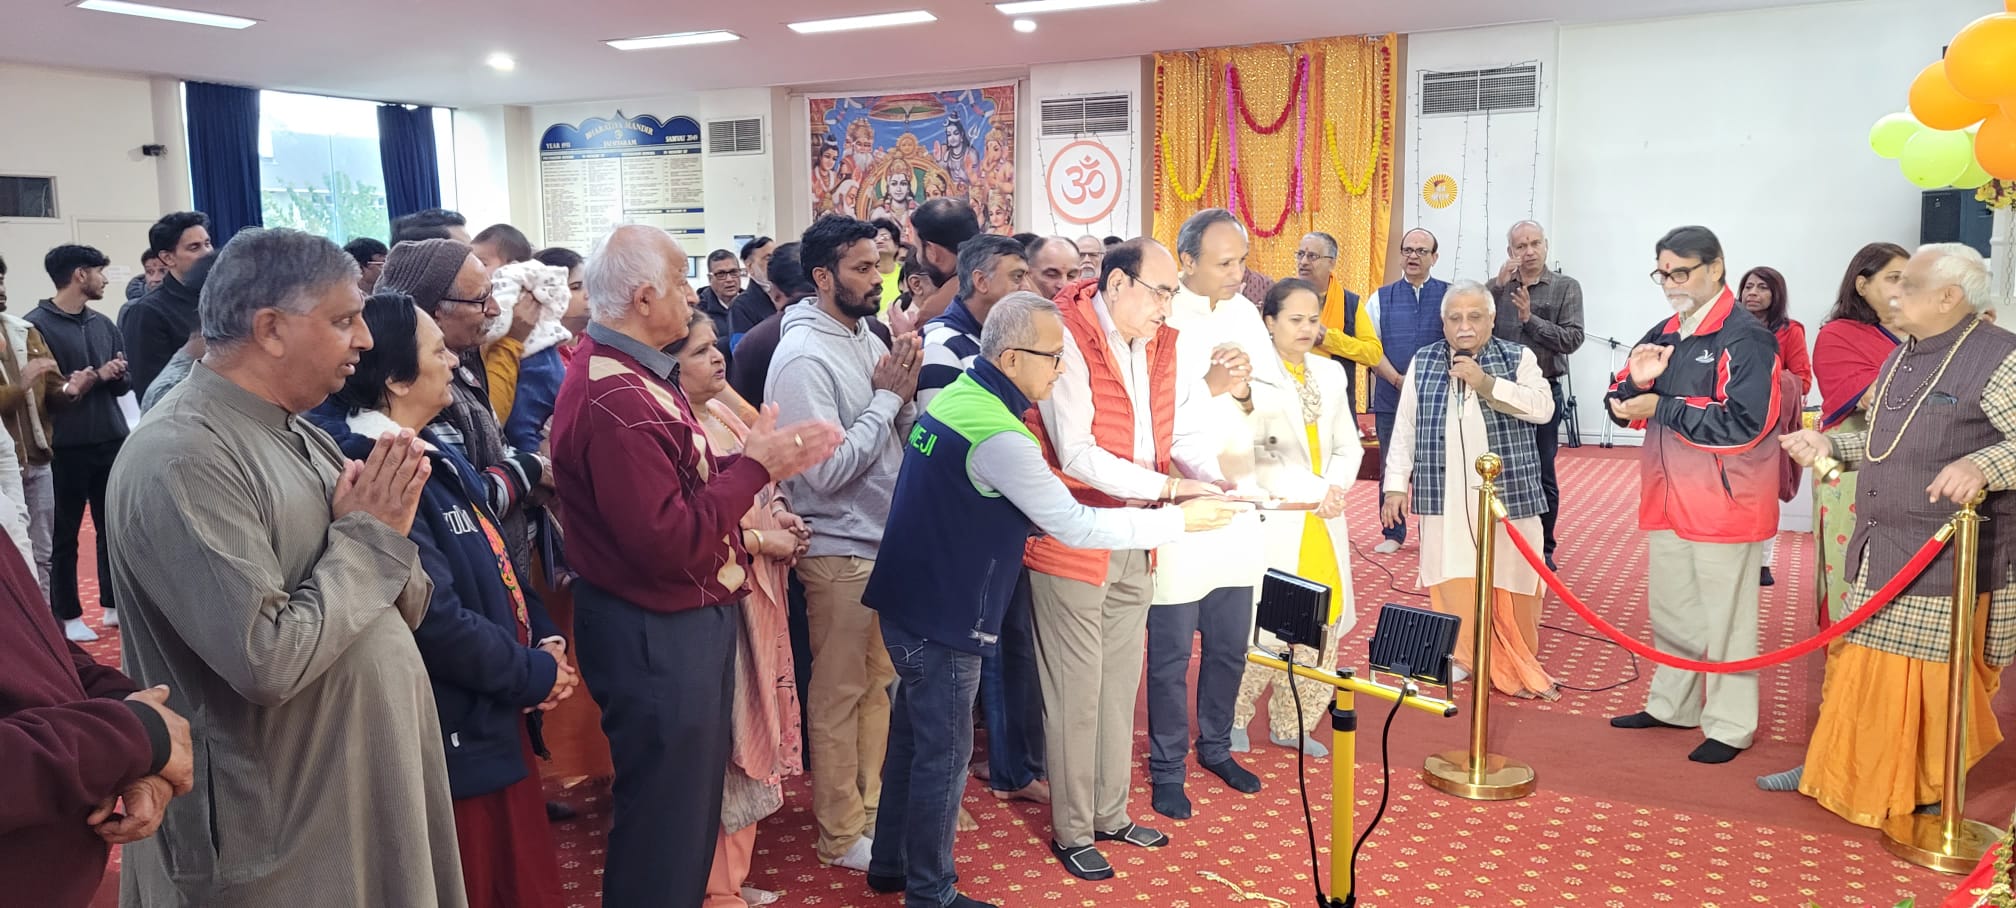 Unveiling the Shri Hanuman Youth Centre: Overwhelming Community Support Creates Momentum